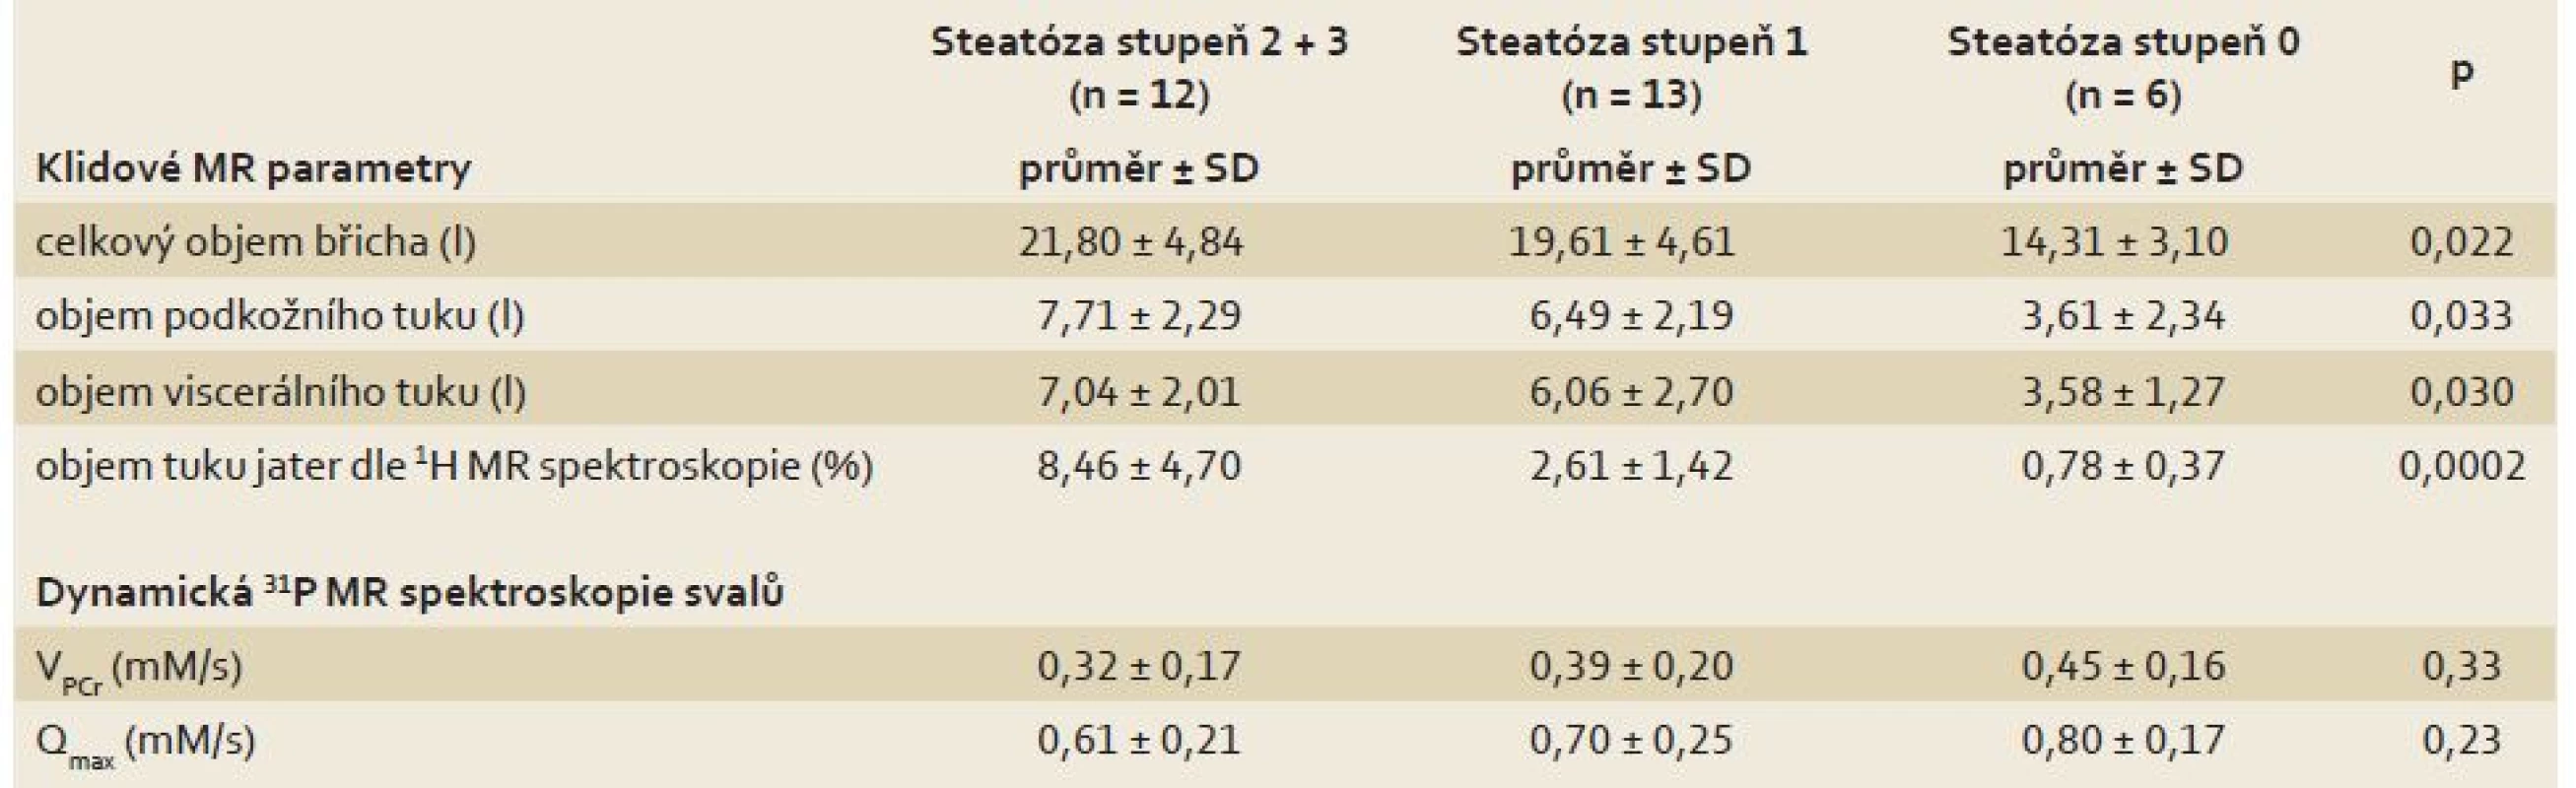 Rozdíly MR parametrů mezi skupinami pacientů s různým stupněm steatózy v biopsii jater.
Tab. 3. Differences in MR parameters between groups of patients with various steatosis grade on the liver biopsy.